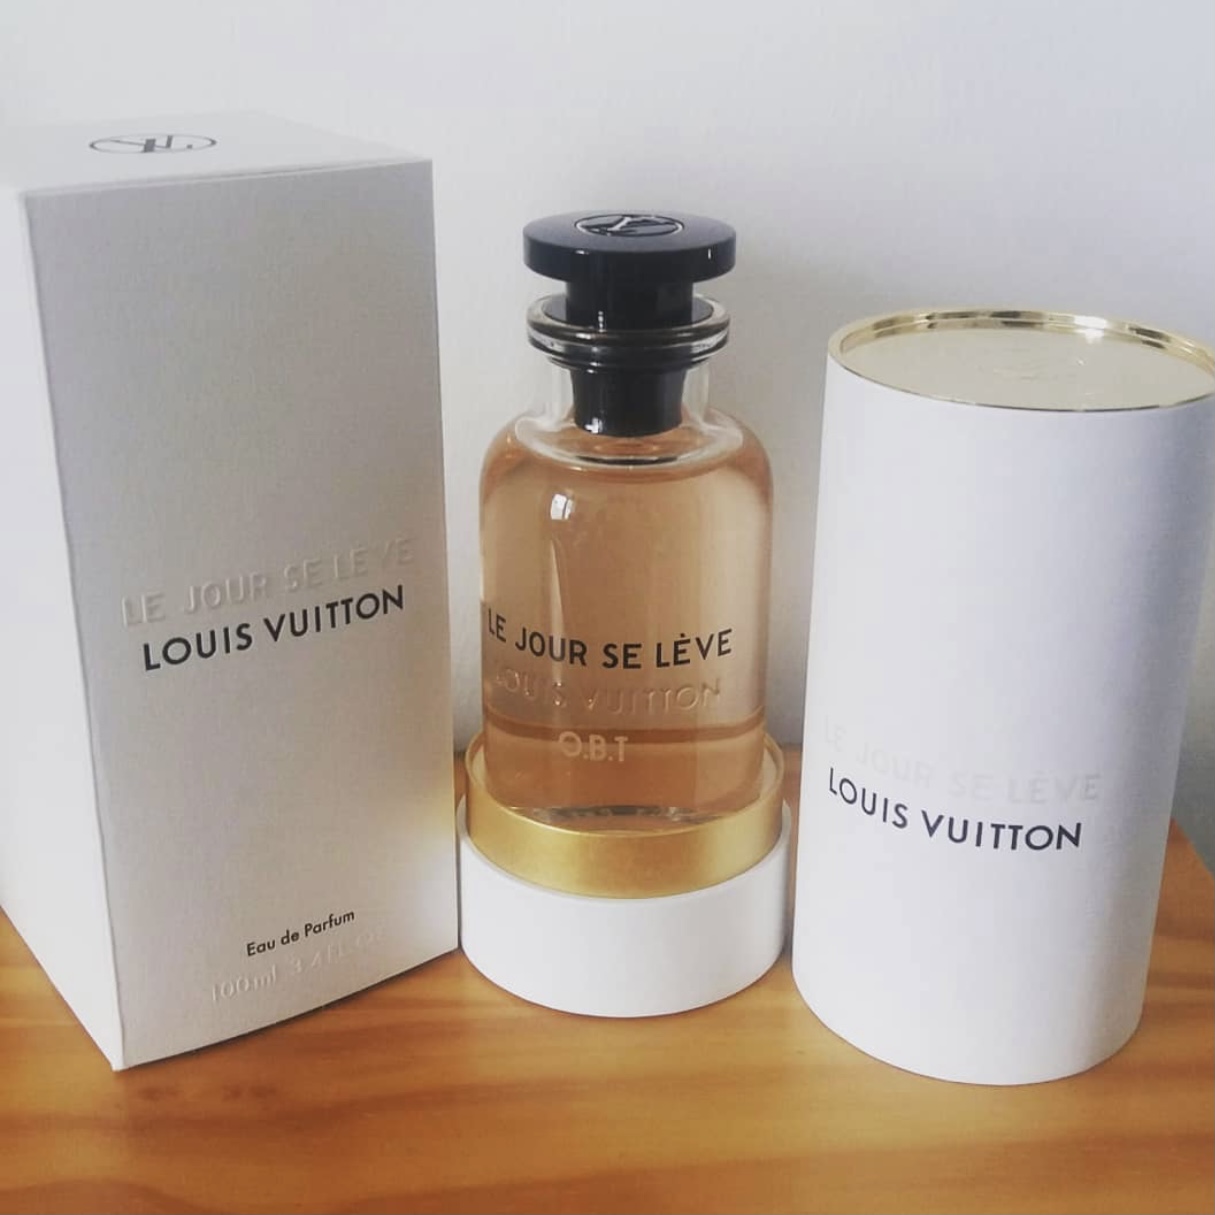 Louis Vuitton California Dream Women's Eau de Parfum 4 x 1.0